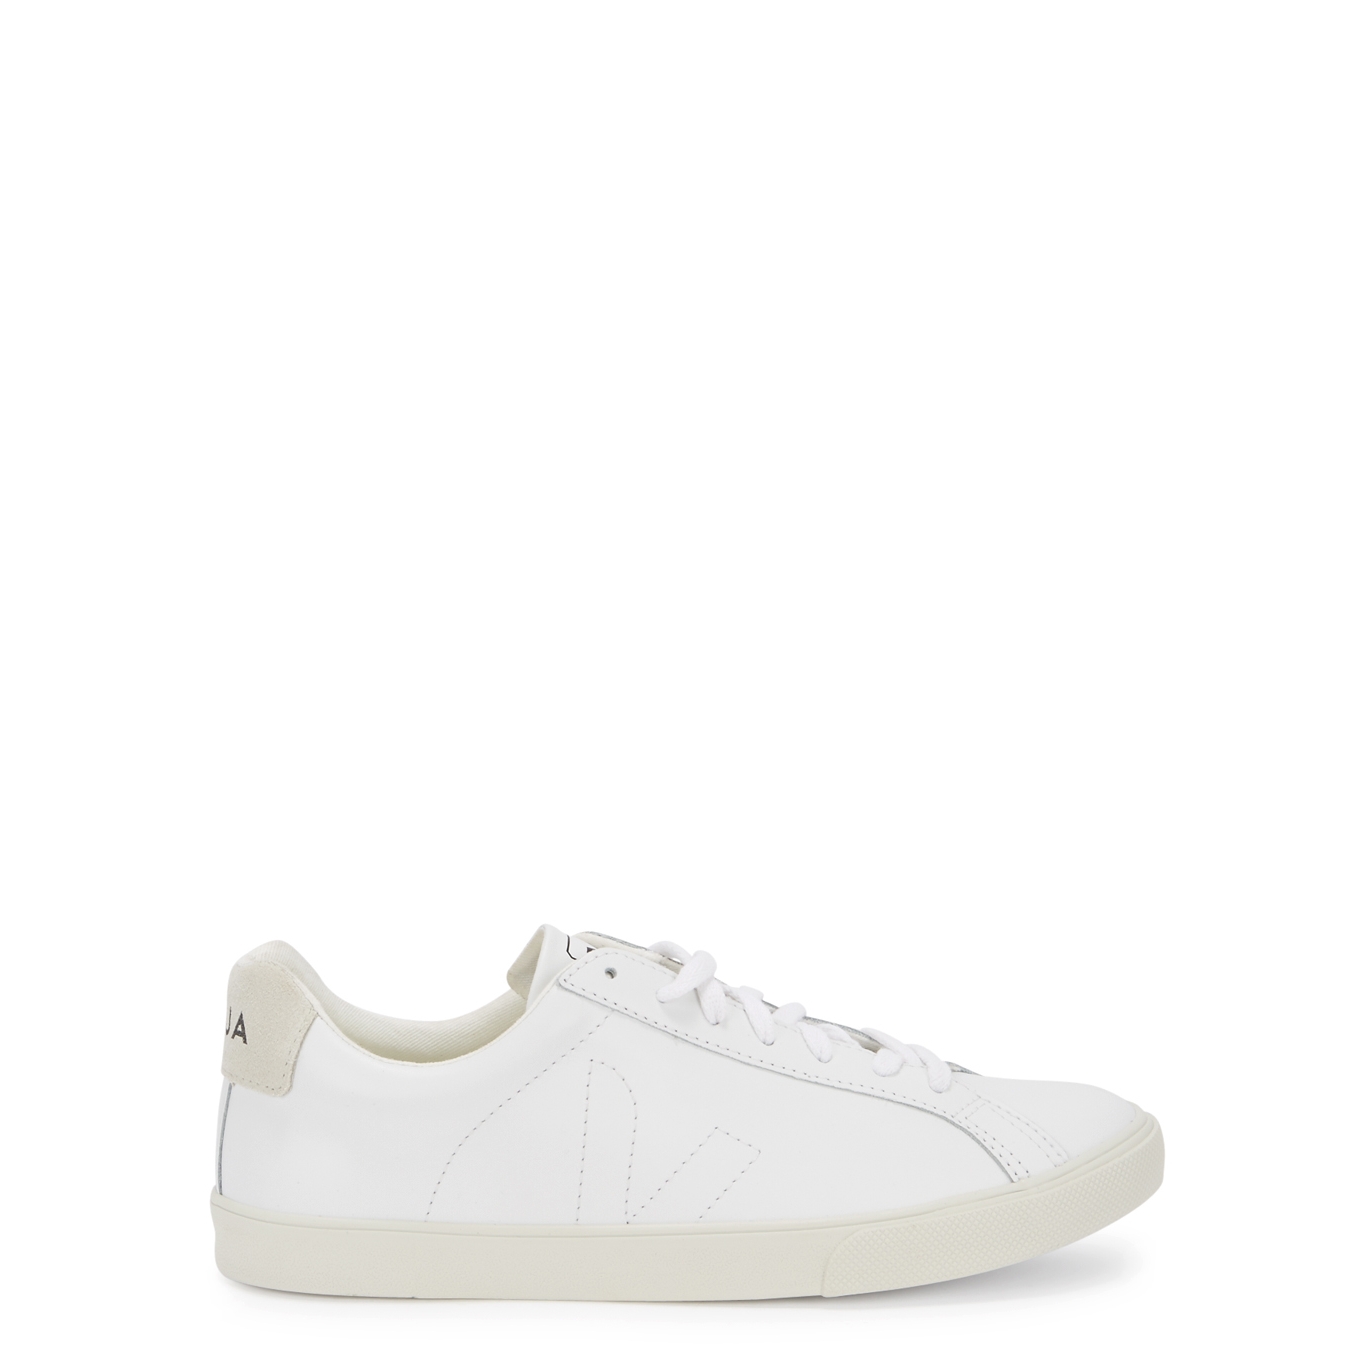 Veja Esplar White Leather Sneakers - 4